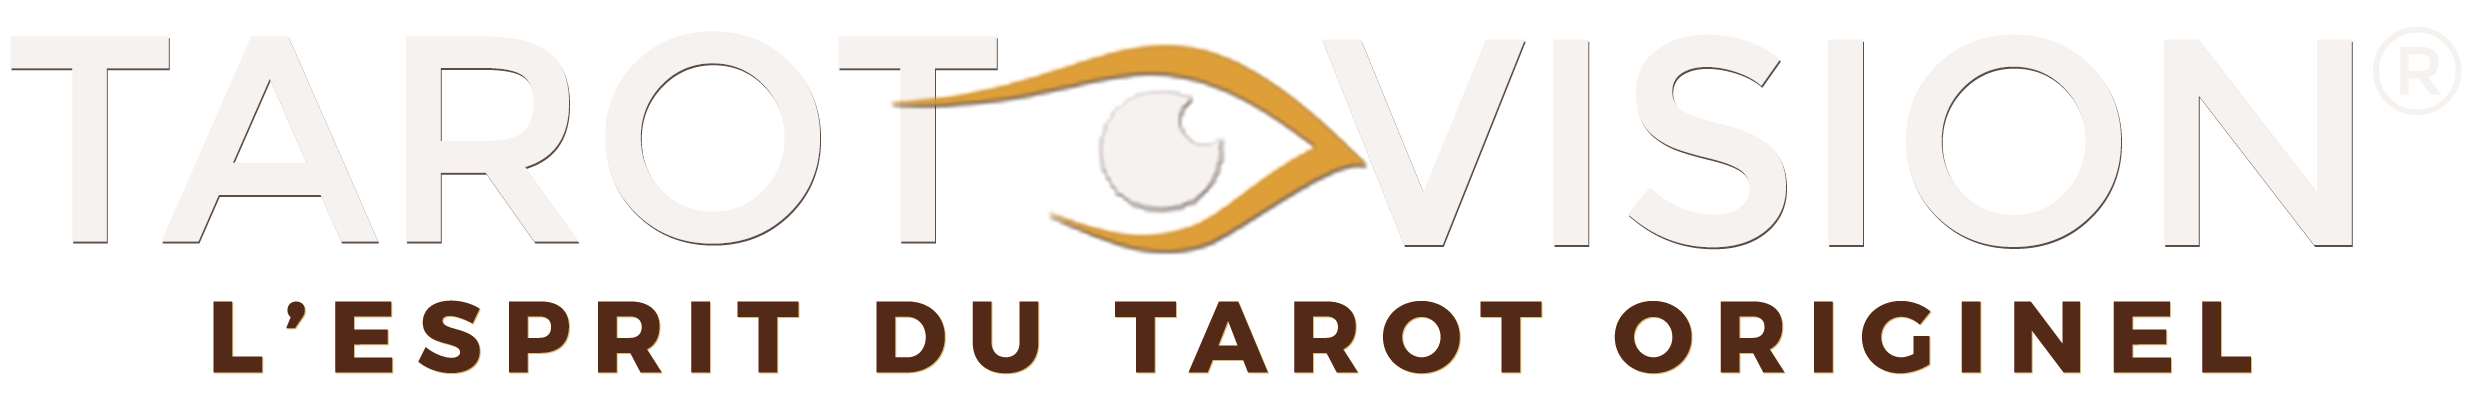 Tarot vision conférence lyon